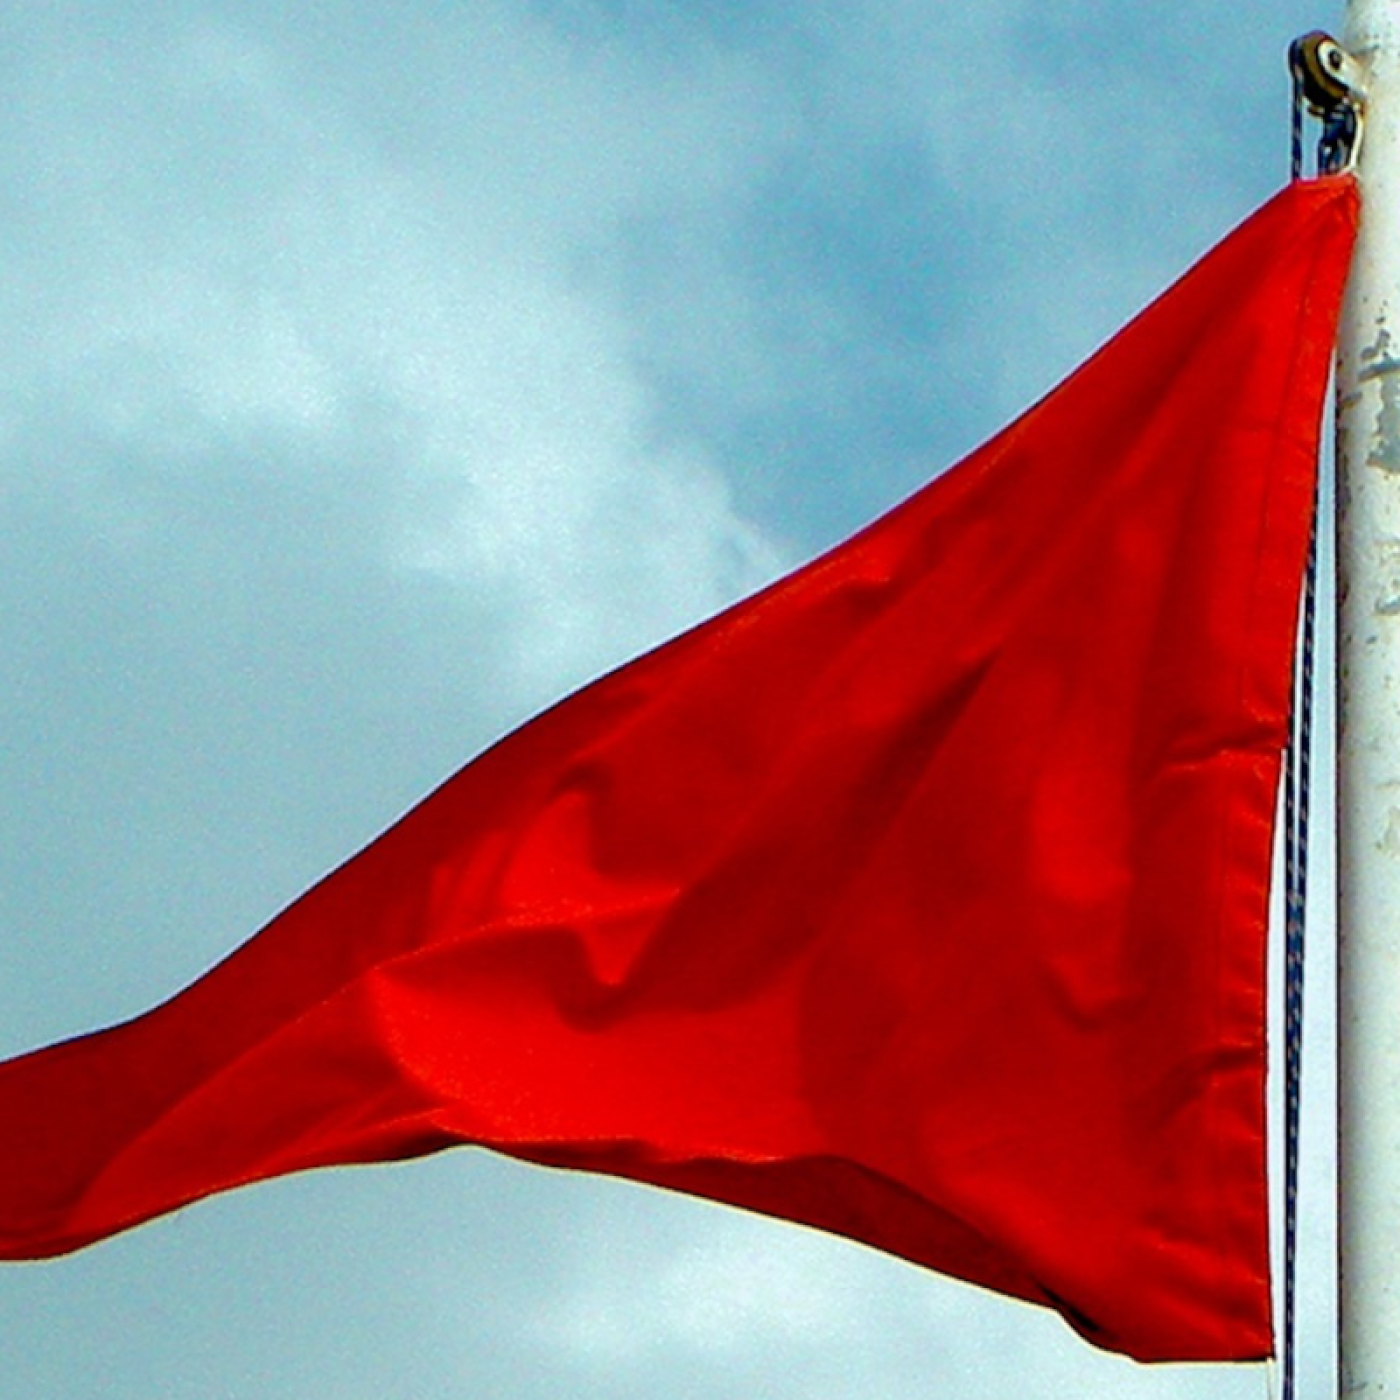 Red Flag  on gray background Photo credit CristianFerronato from pixabay. via Canva Pro